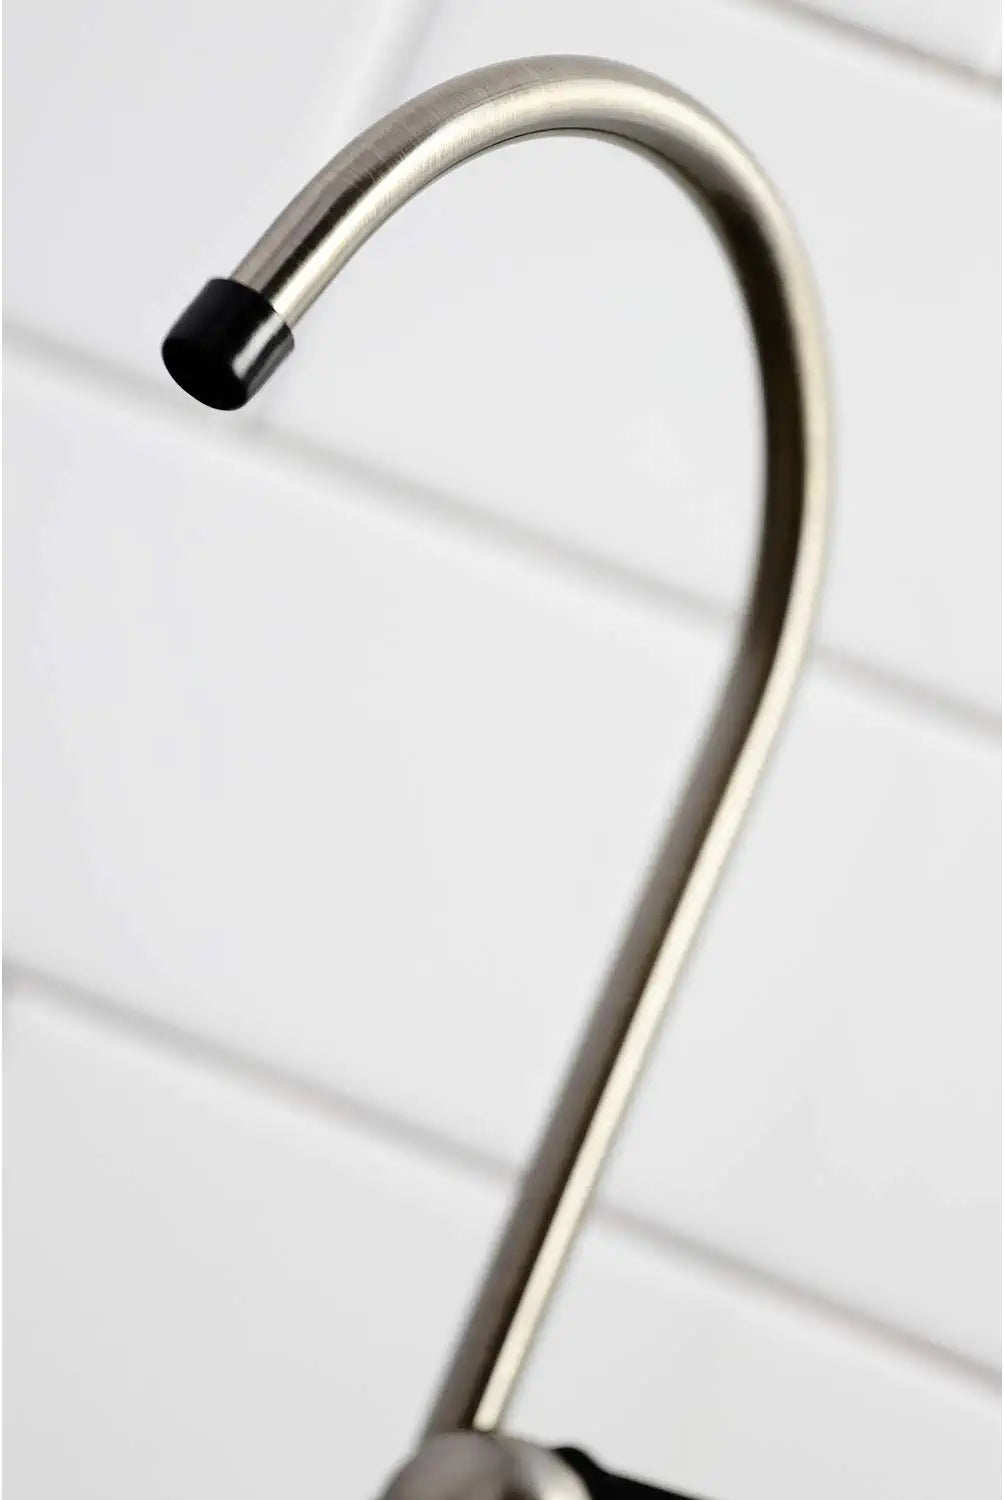 Kingston Brass K6193 Americana Single-Handle Water Filtration Faucet, Antique Brass